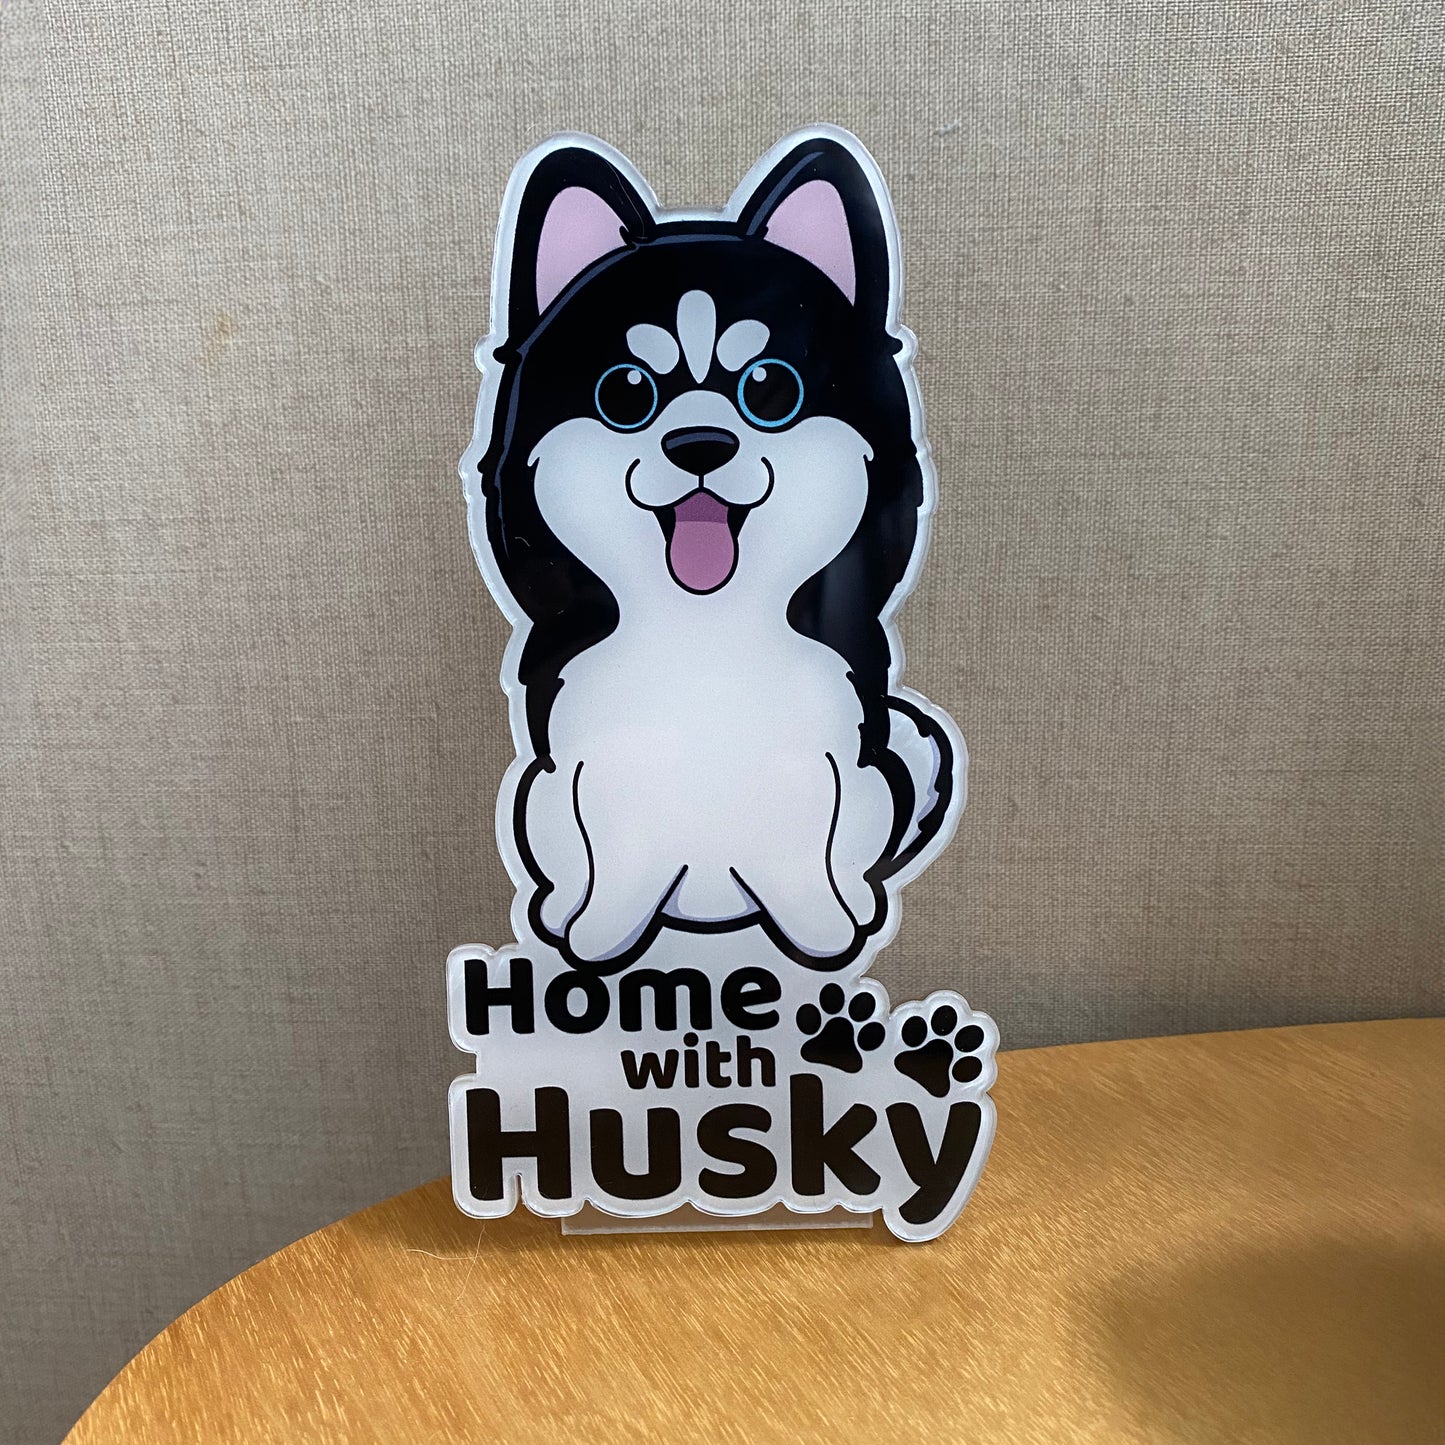 Home with Husky